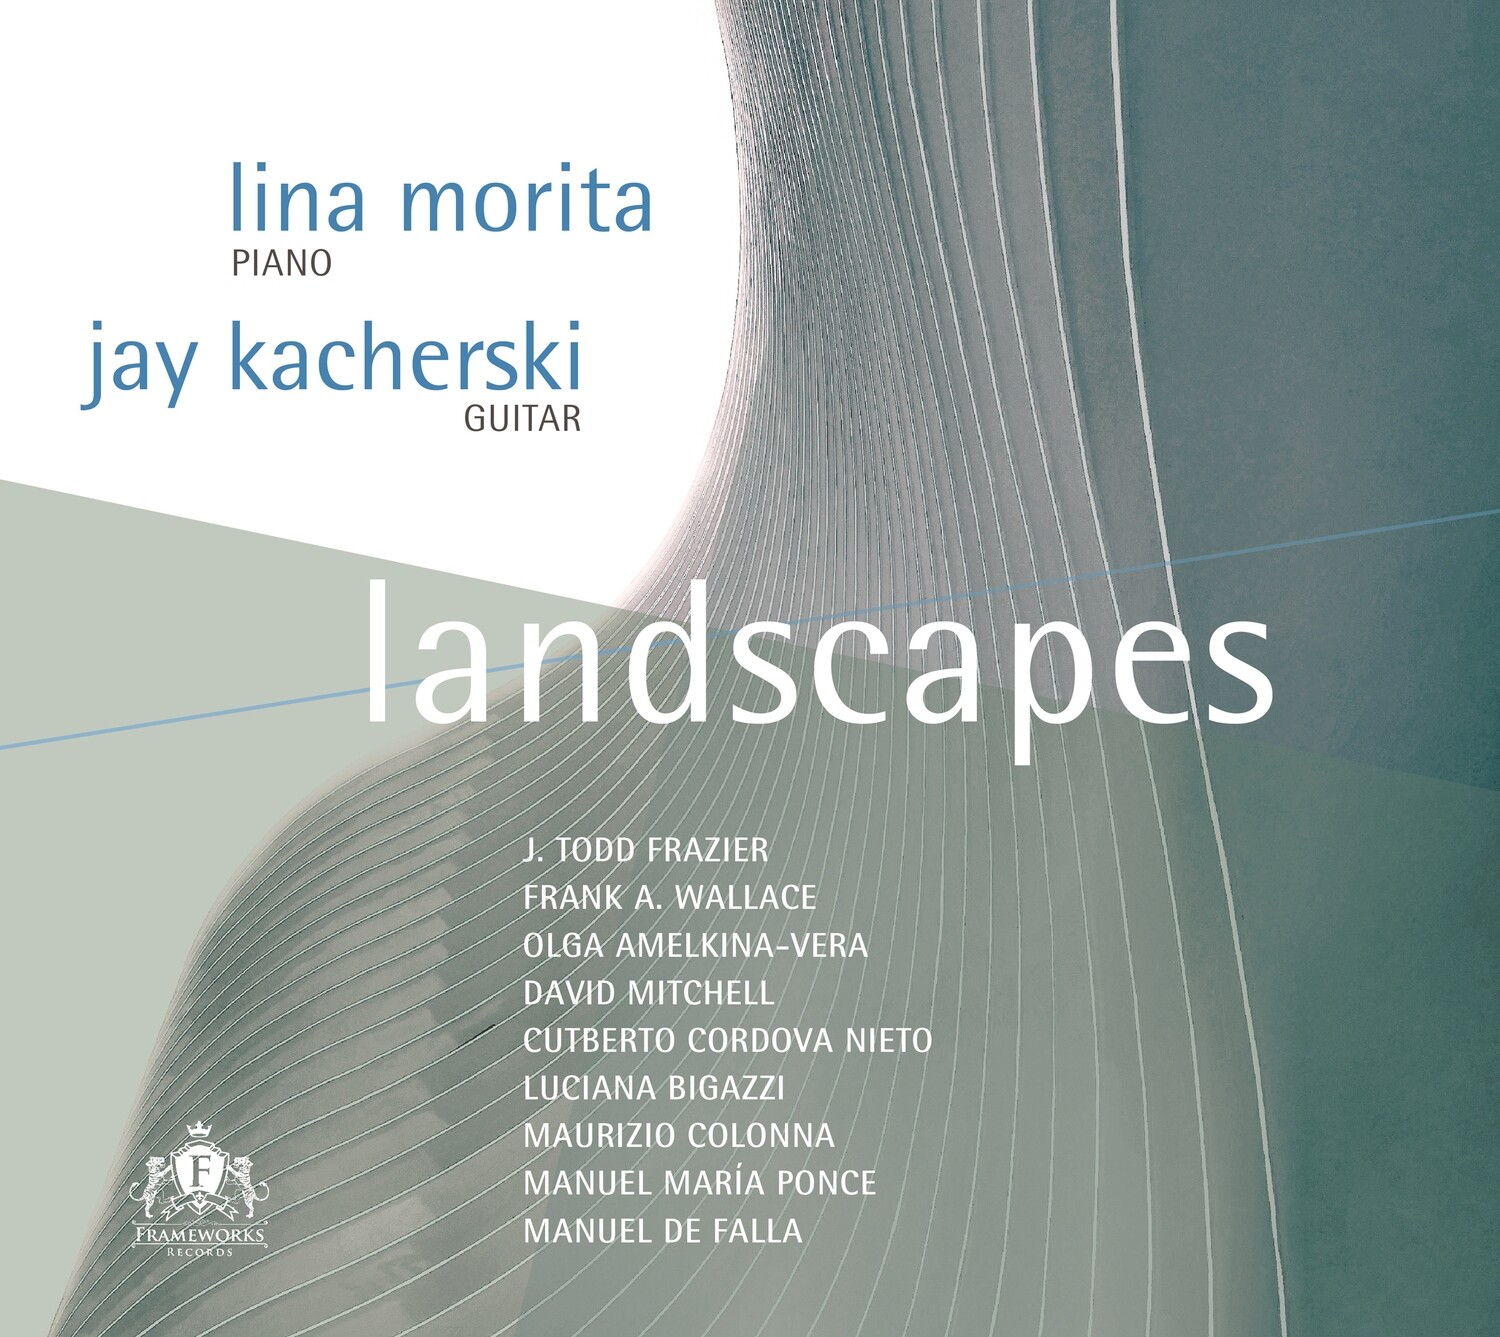 Jay Kacherski and Lina Morita - Landscapes - DIGITAL DOWNLOAD